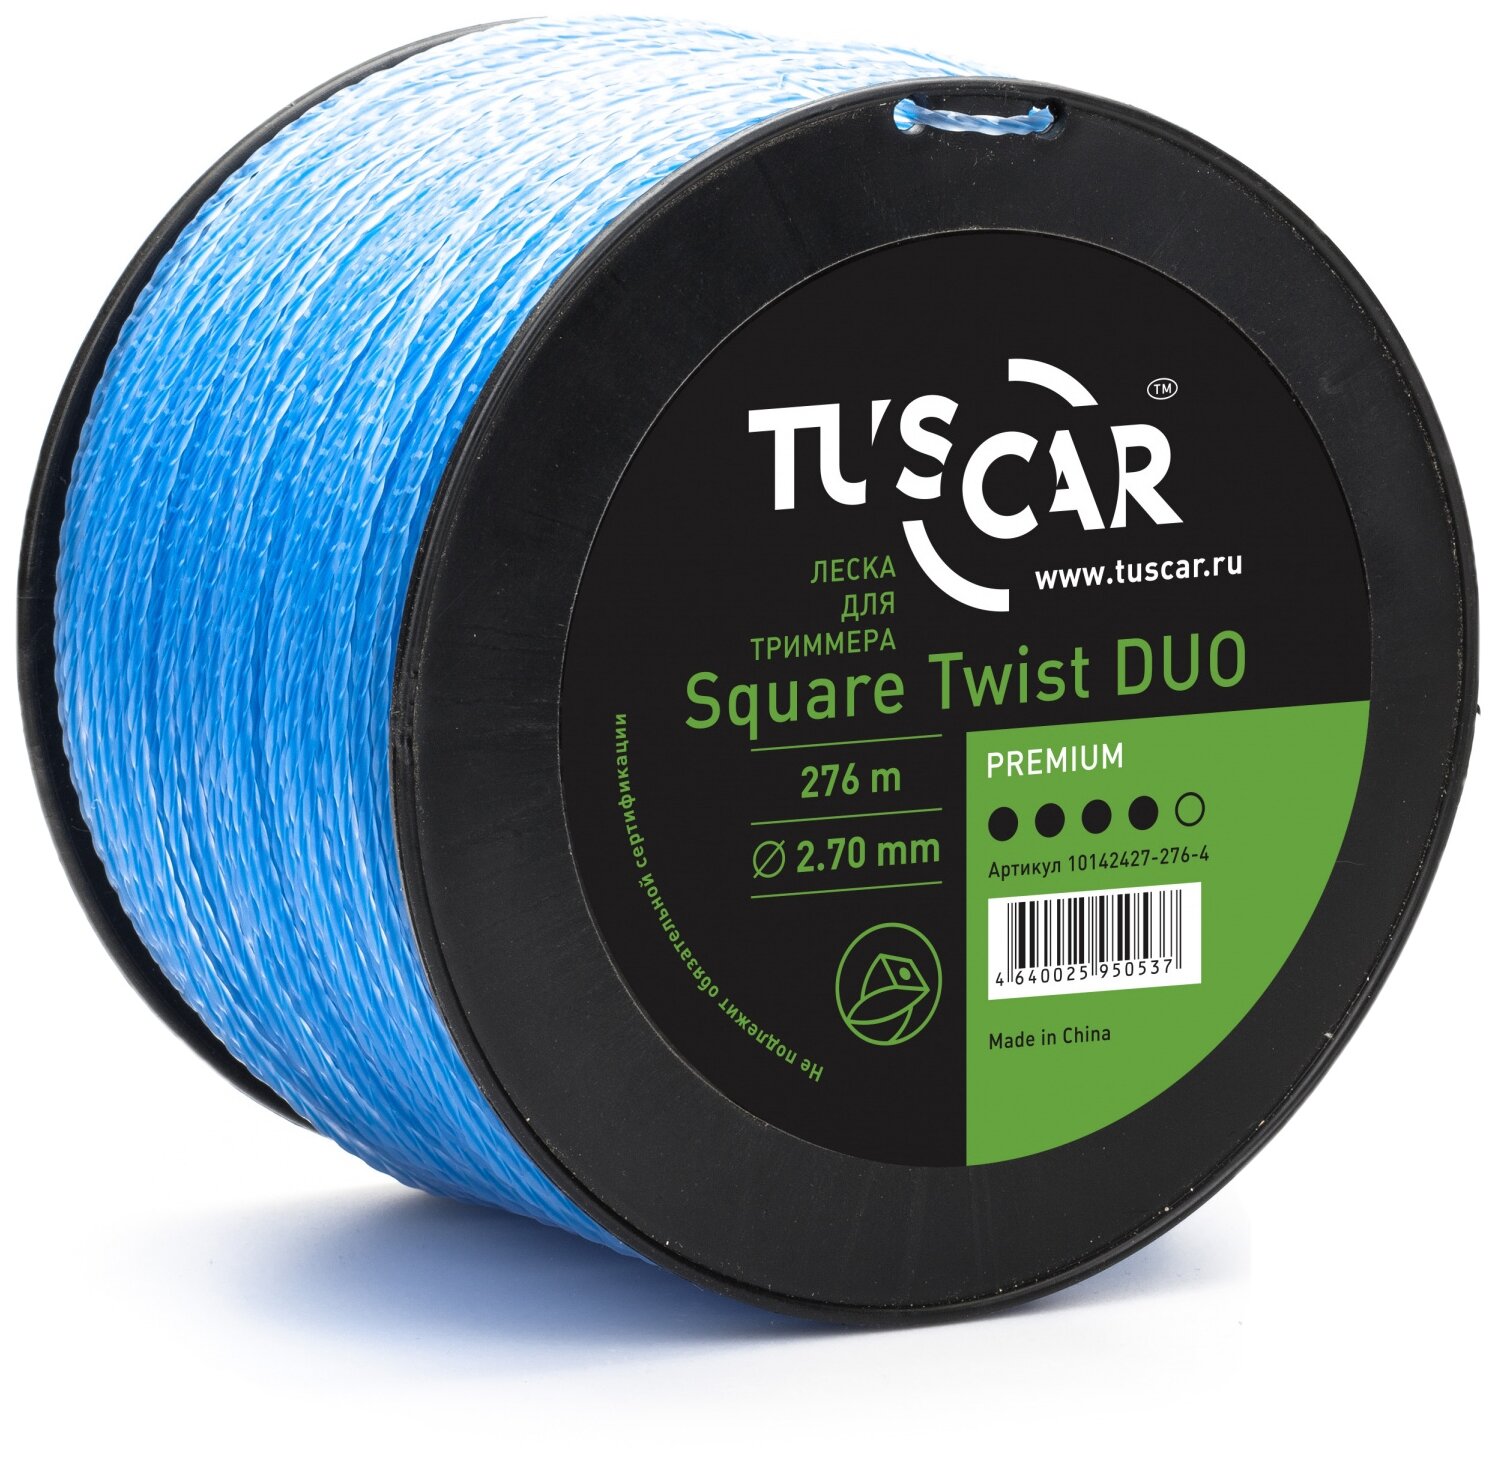 Леска для триммера TUSCAR Square Twist DUO Premium, 2.70мм* 276м, 10142427-276-4